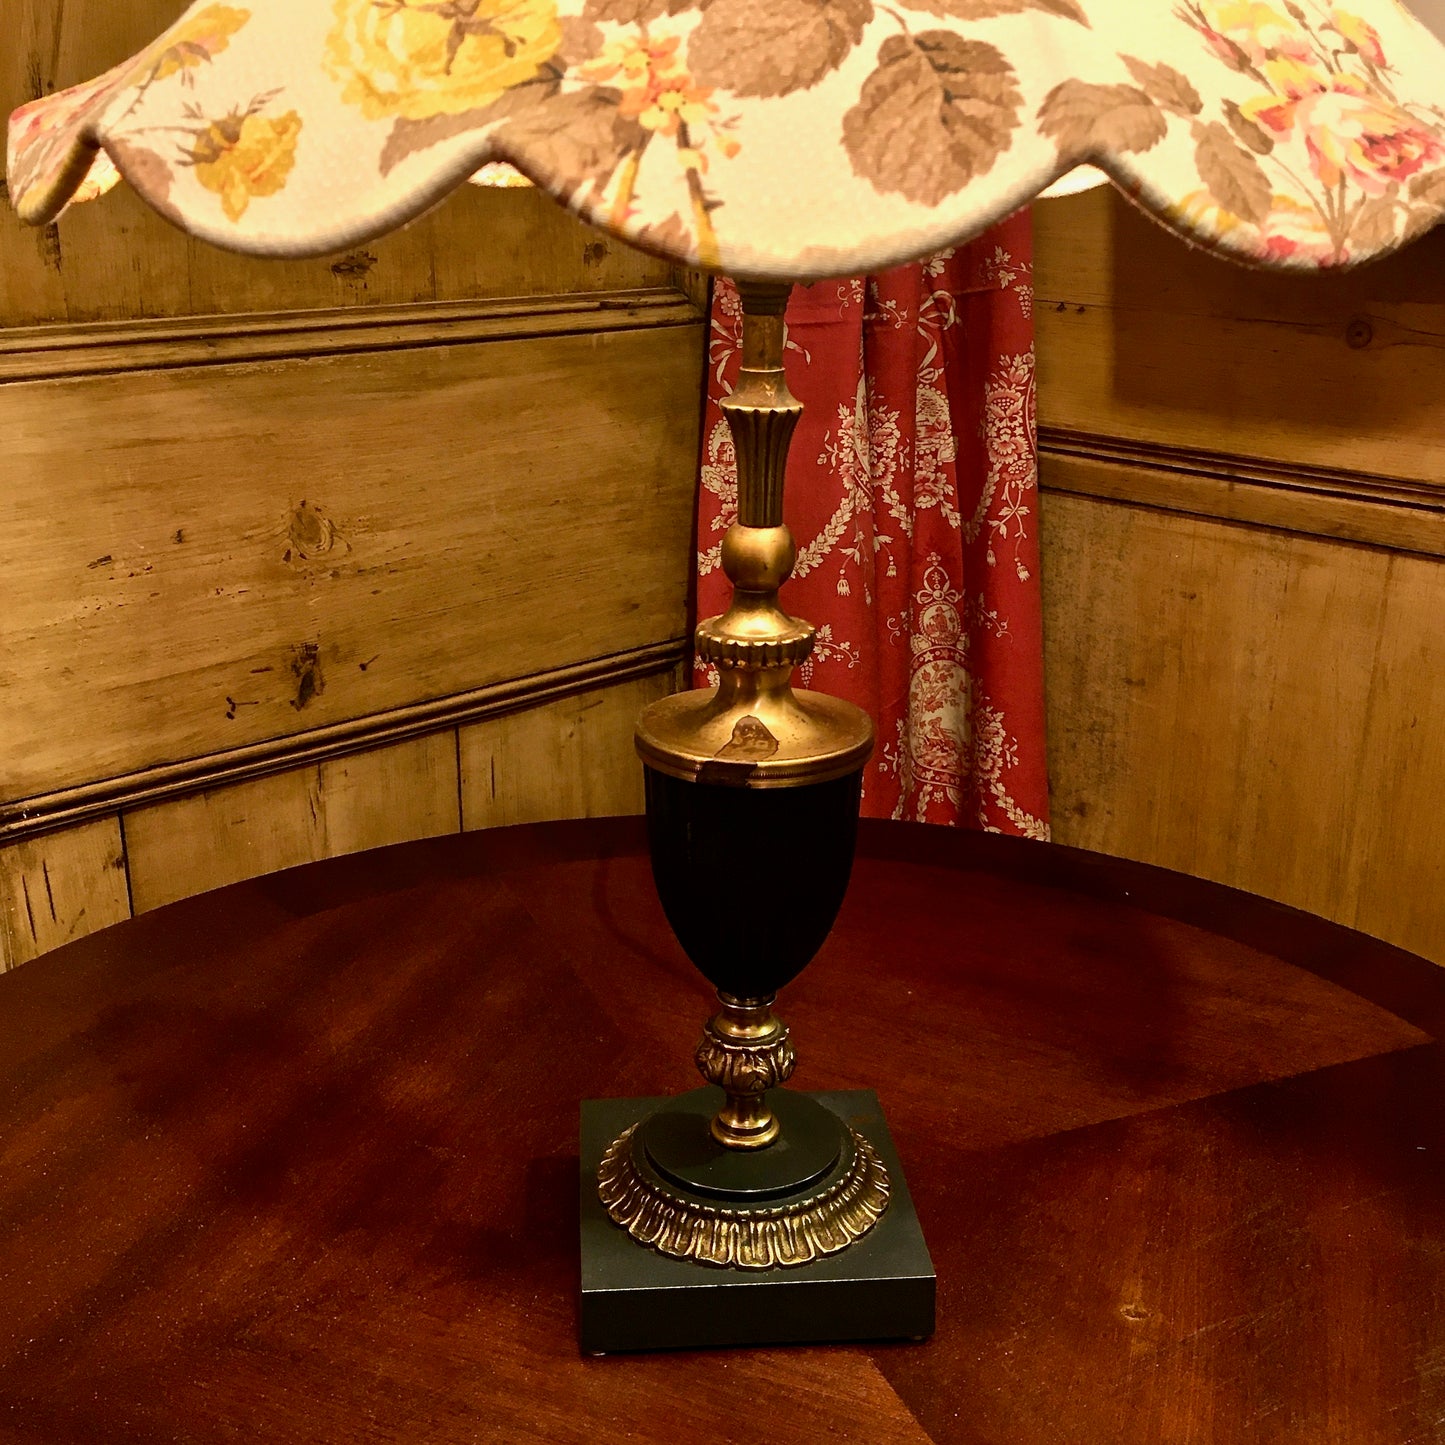 ORIGINAL GREEN URN TABLE LAMP & SHADE